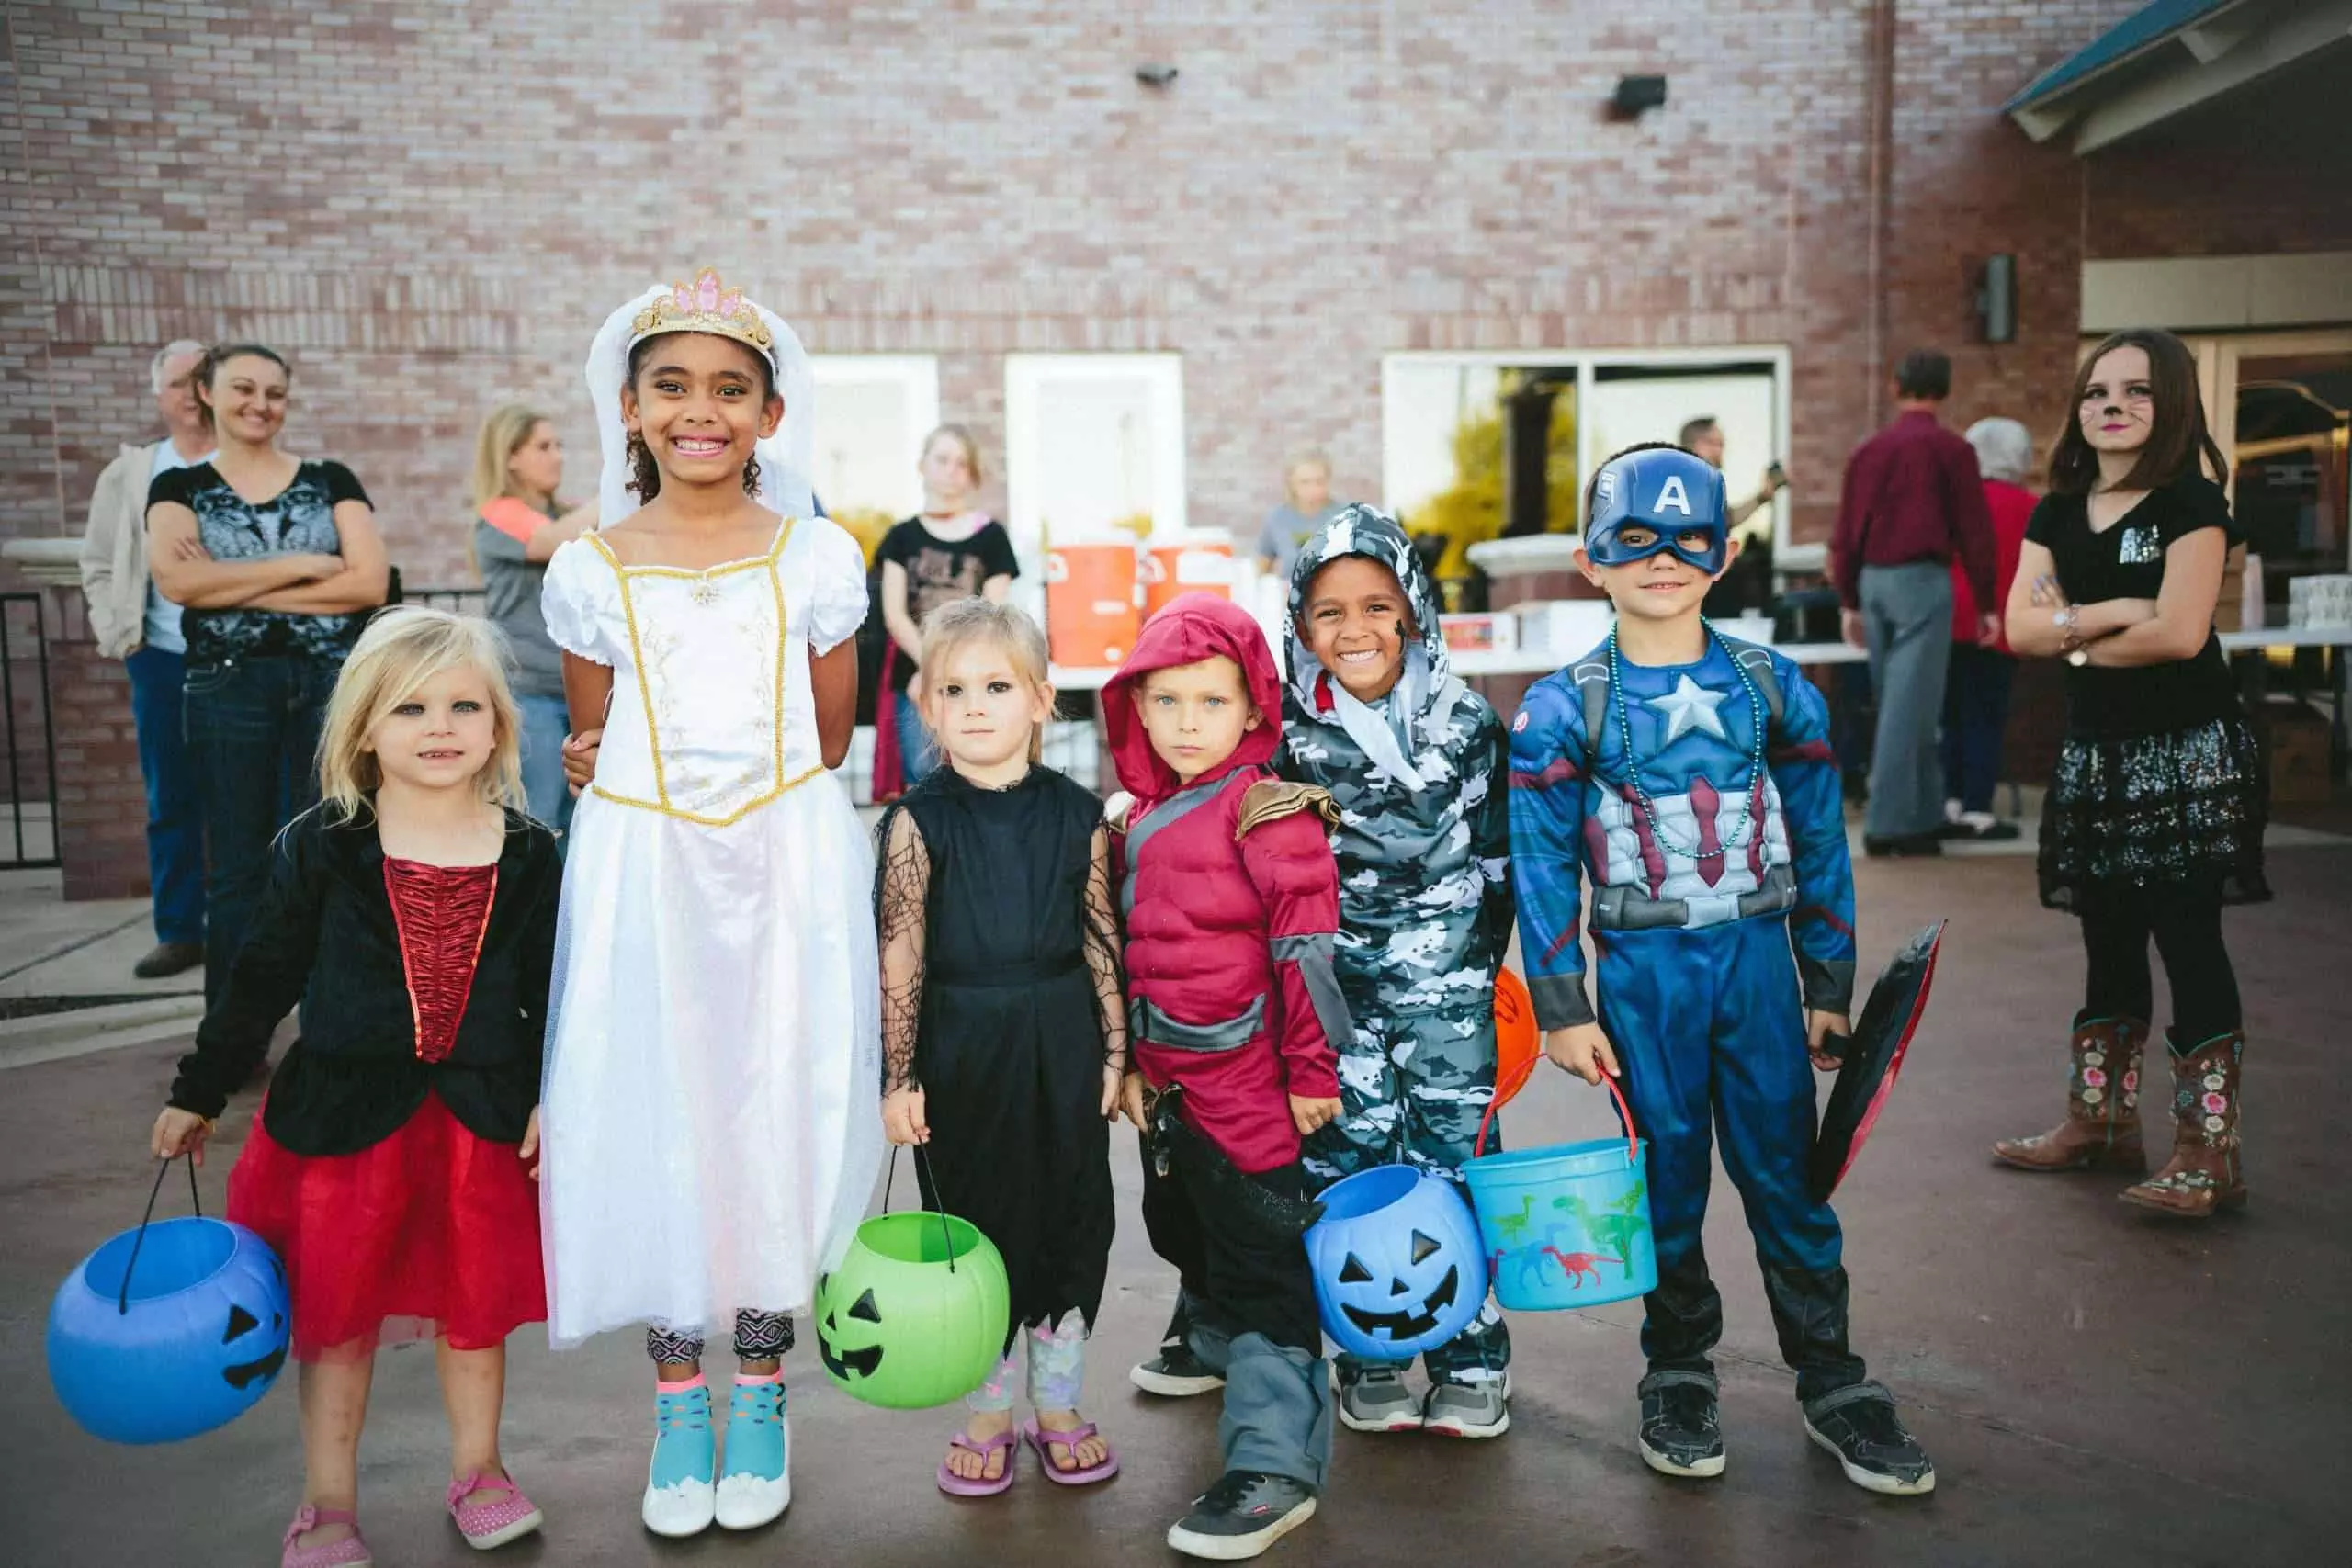 Halloween costume ideas for kids